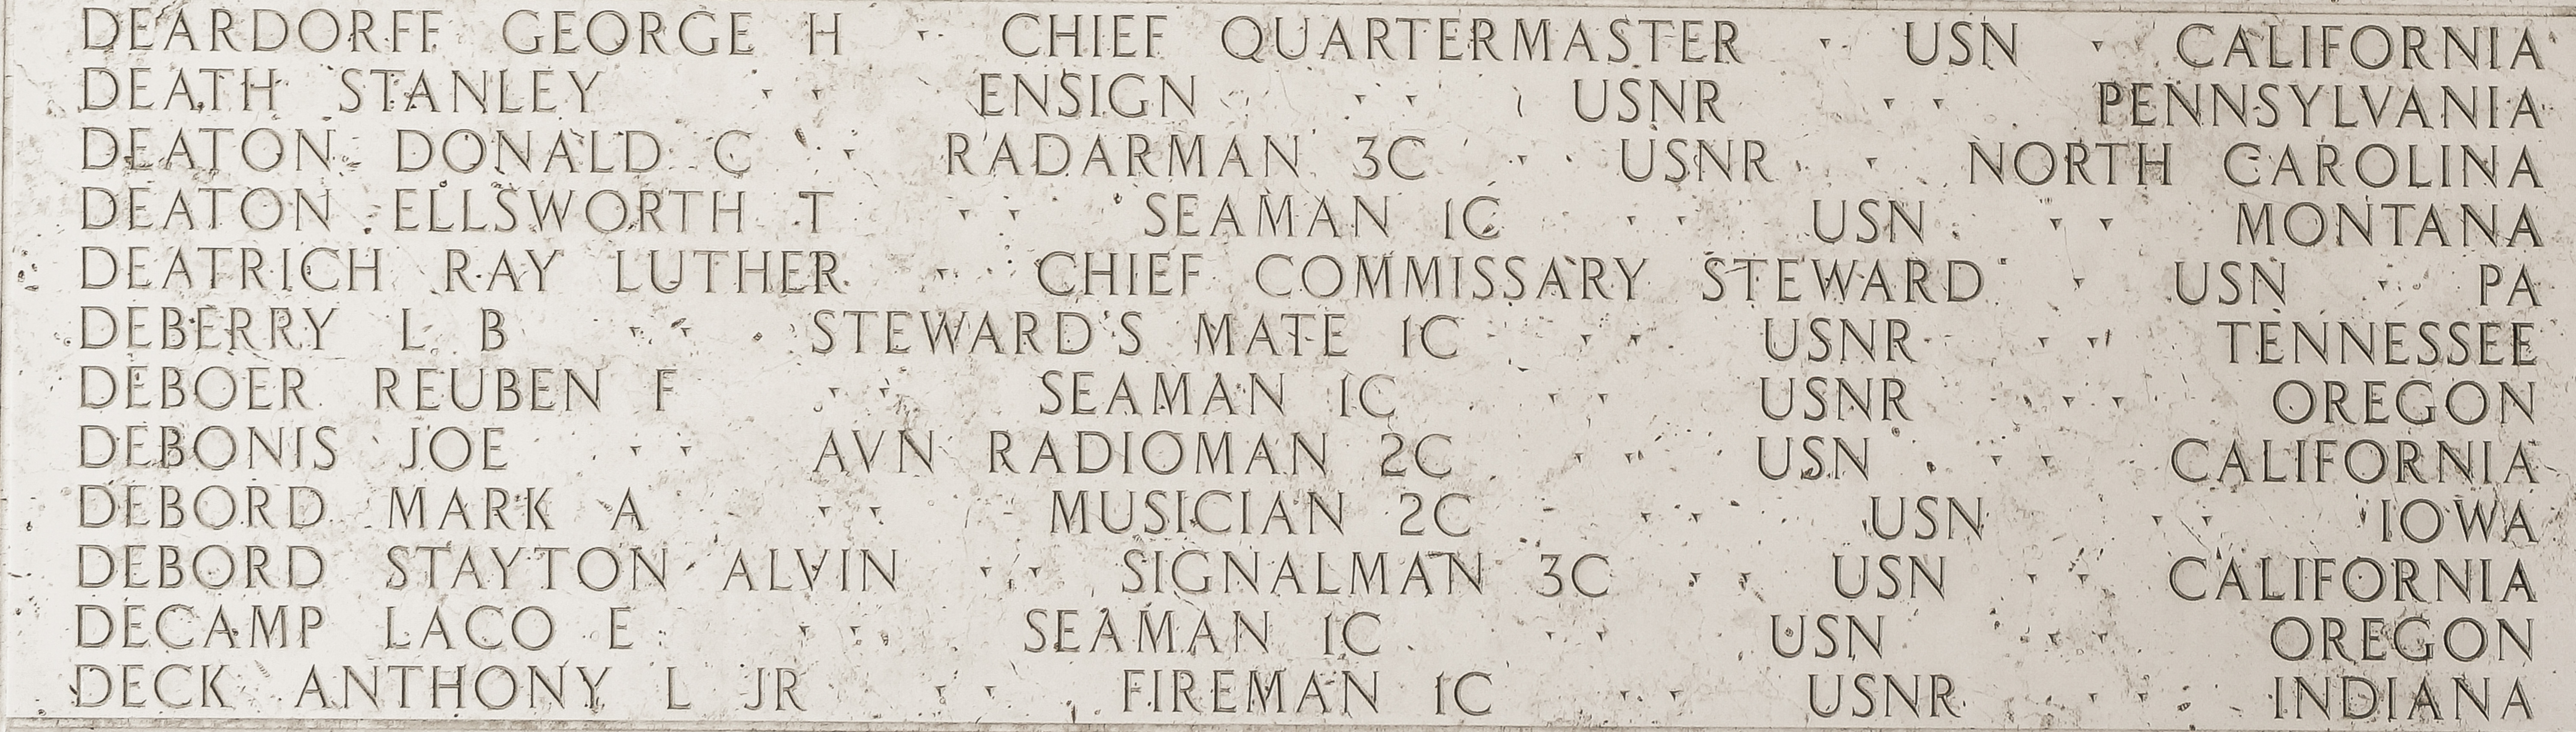 George H. Deardorff, Chief Quartermaster